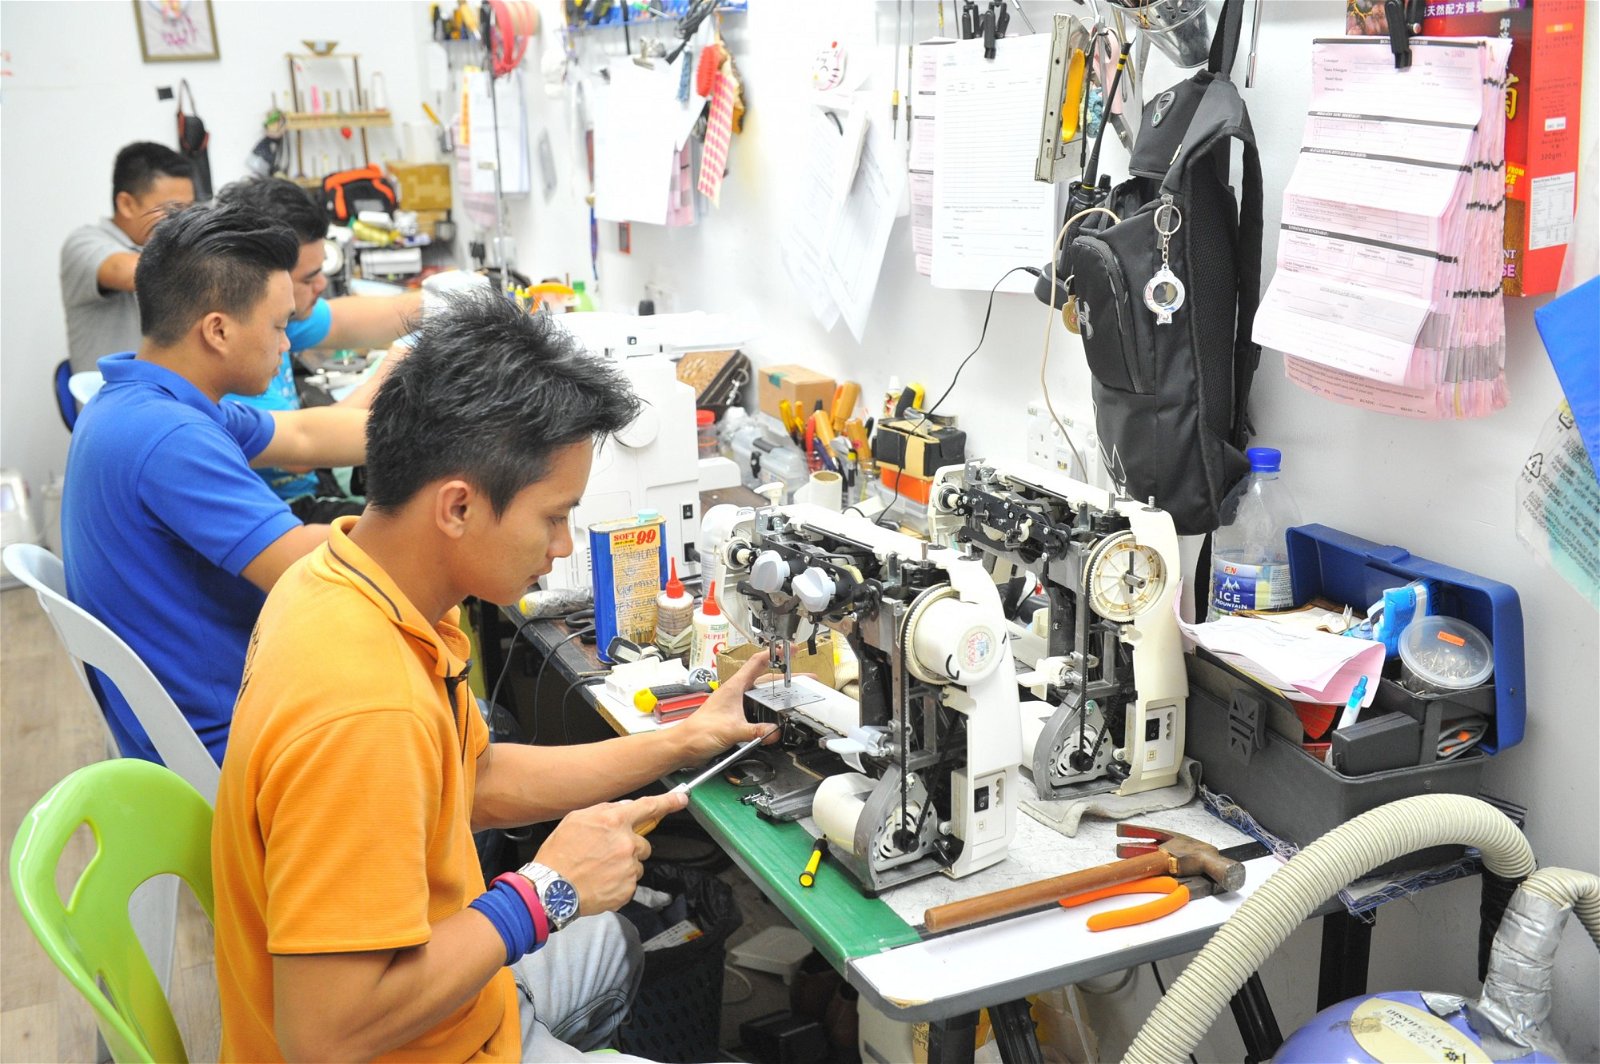 ▲Mostwell私人有限公司即谢月丽与先生的公司是日本缝纫 机品牌车乐美（Janome）在本地的代理商，因此该公司也 接受折价贴换（Trade-in），二手缝纫机经过技术人员维修 后，再免费提供给有需要的学员。